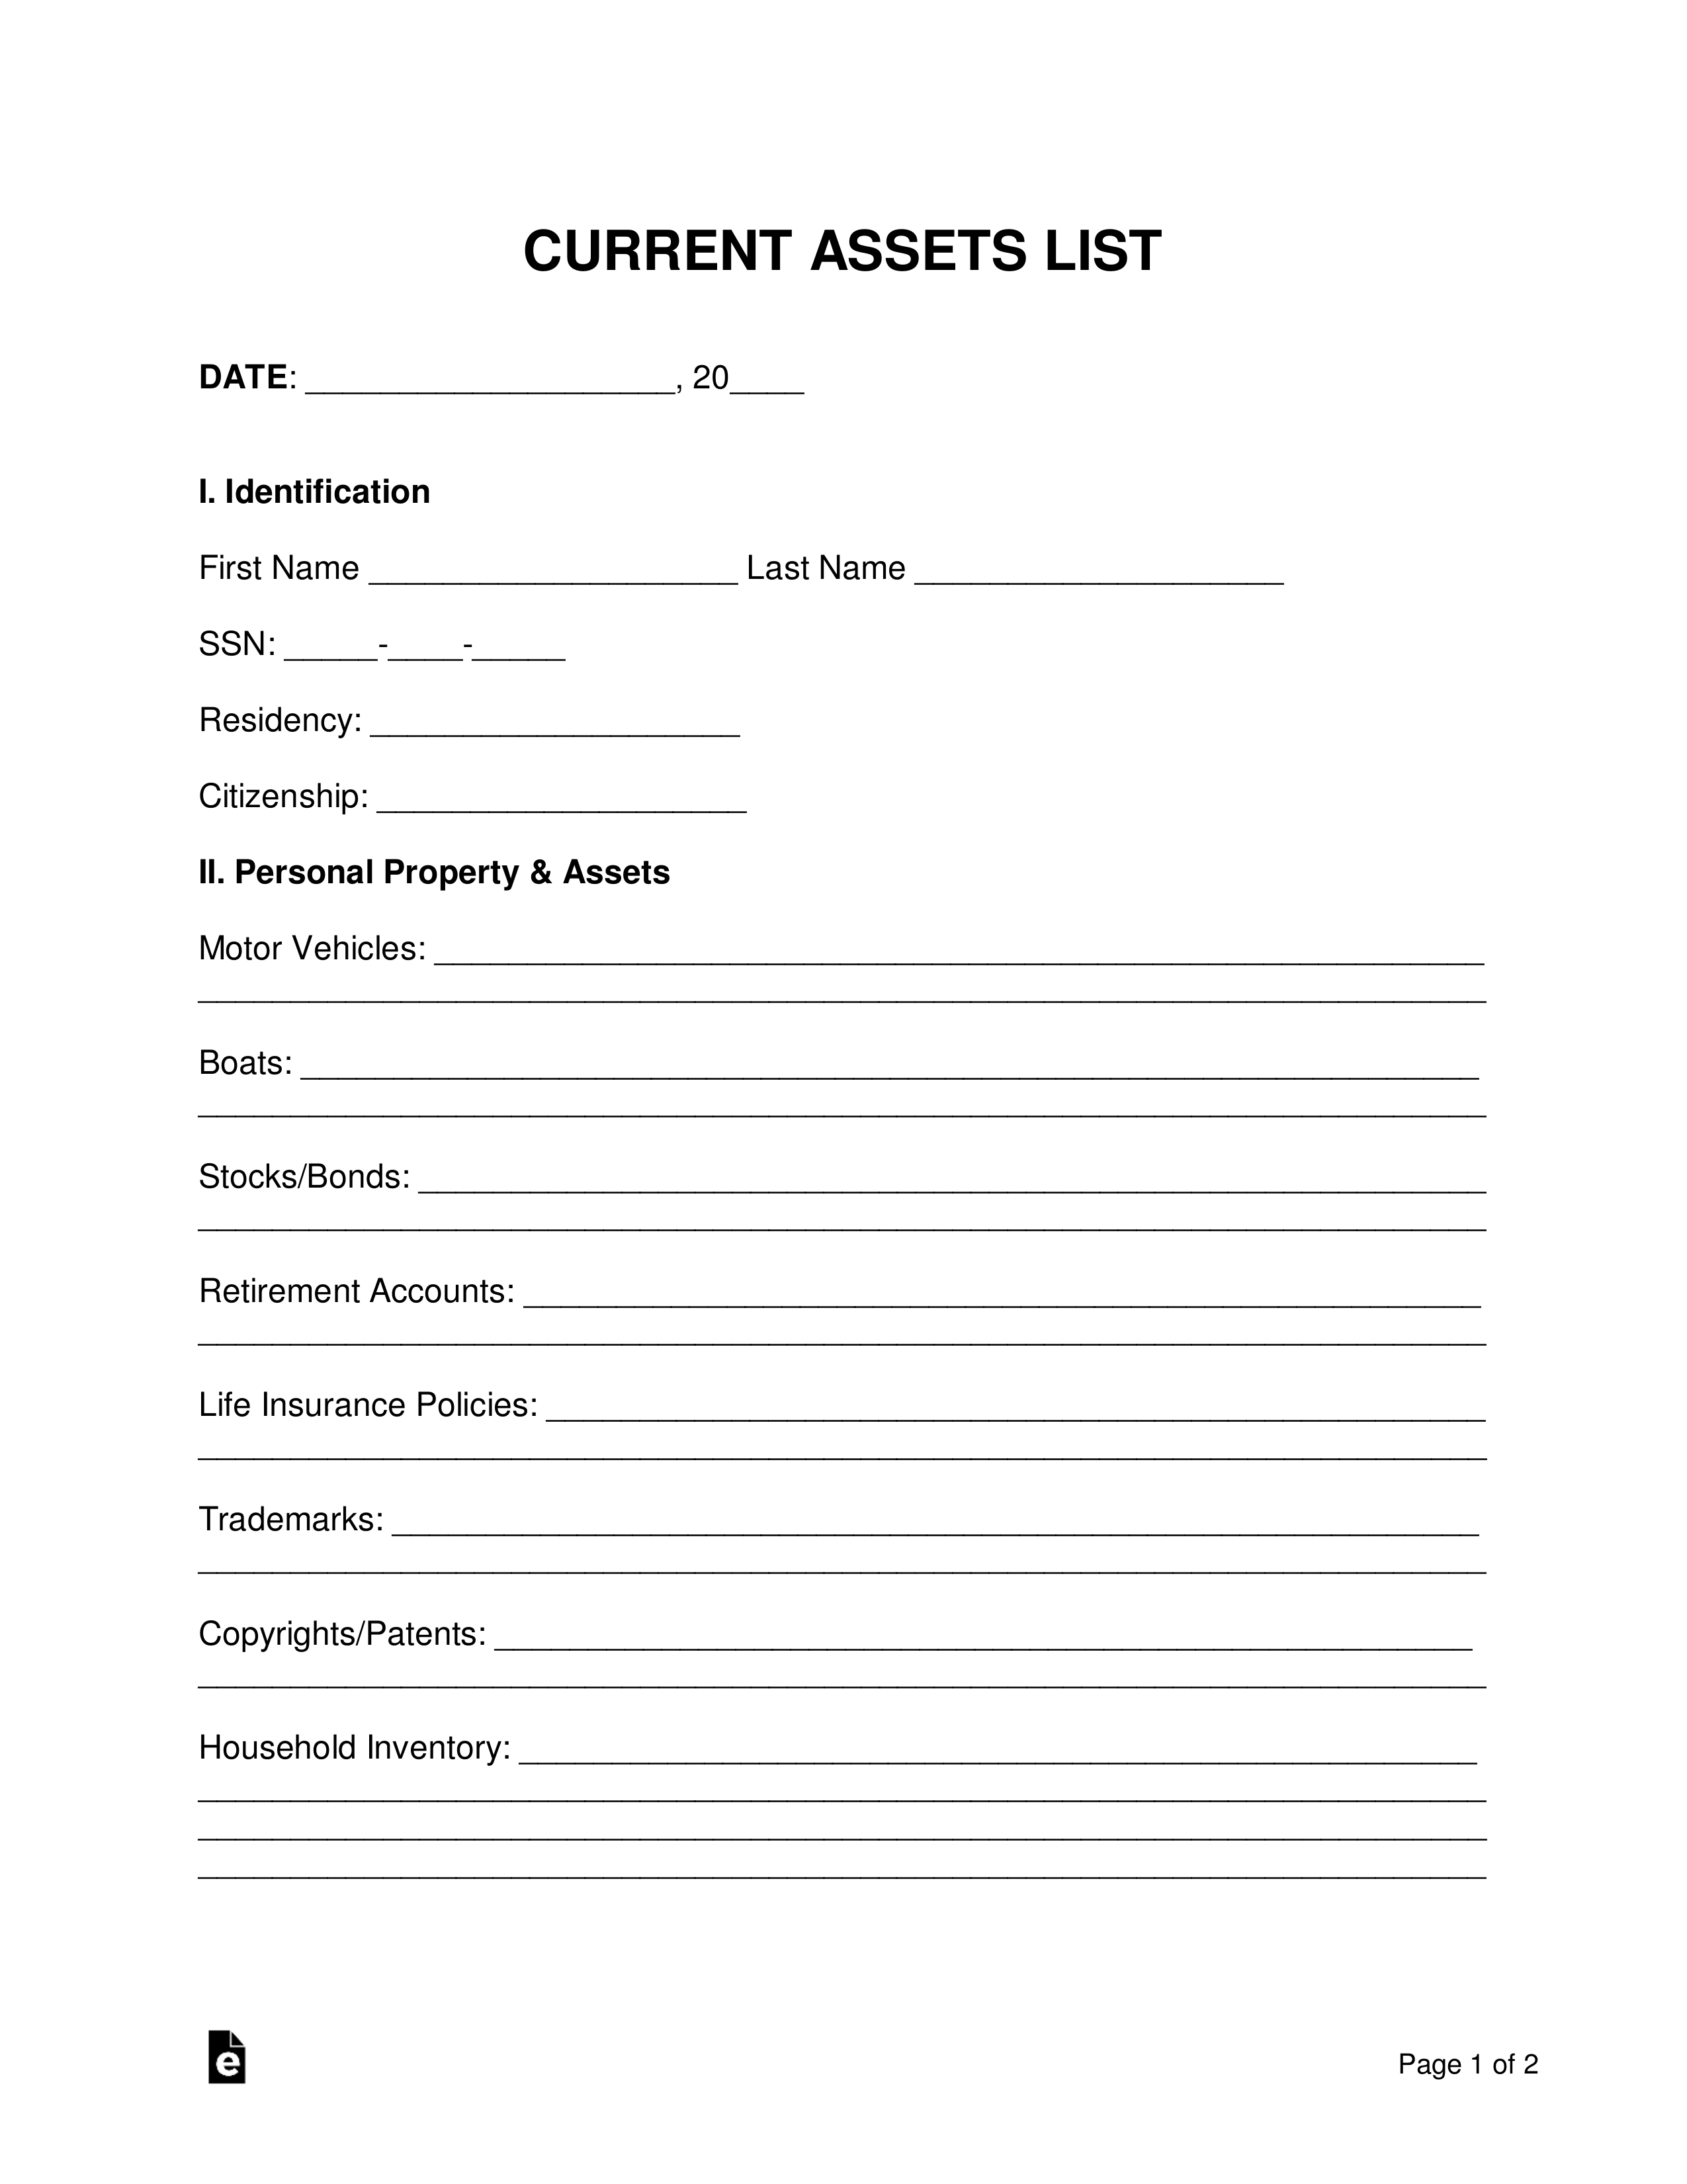 Current Assets List